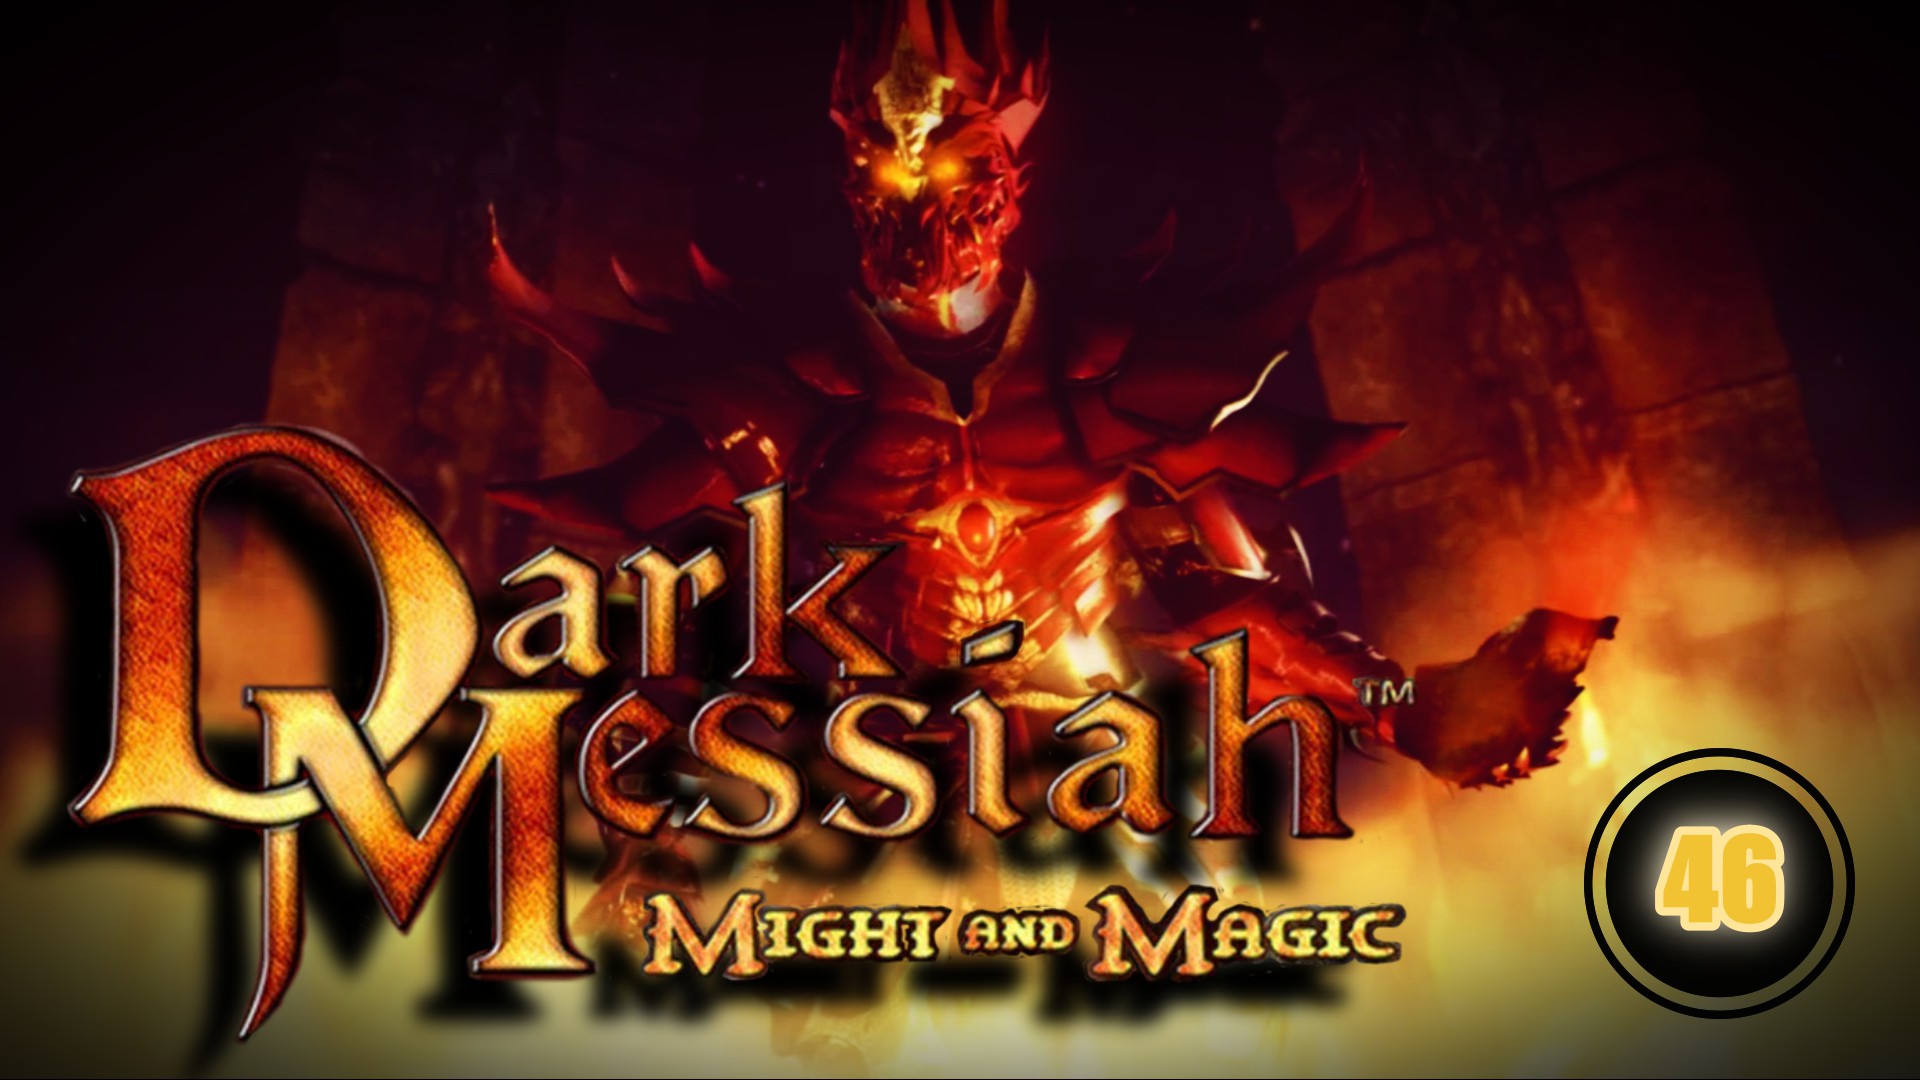 Dark Messiah of Might and Magic 46